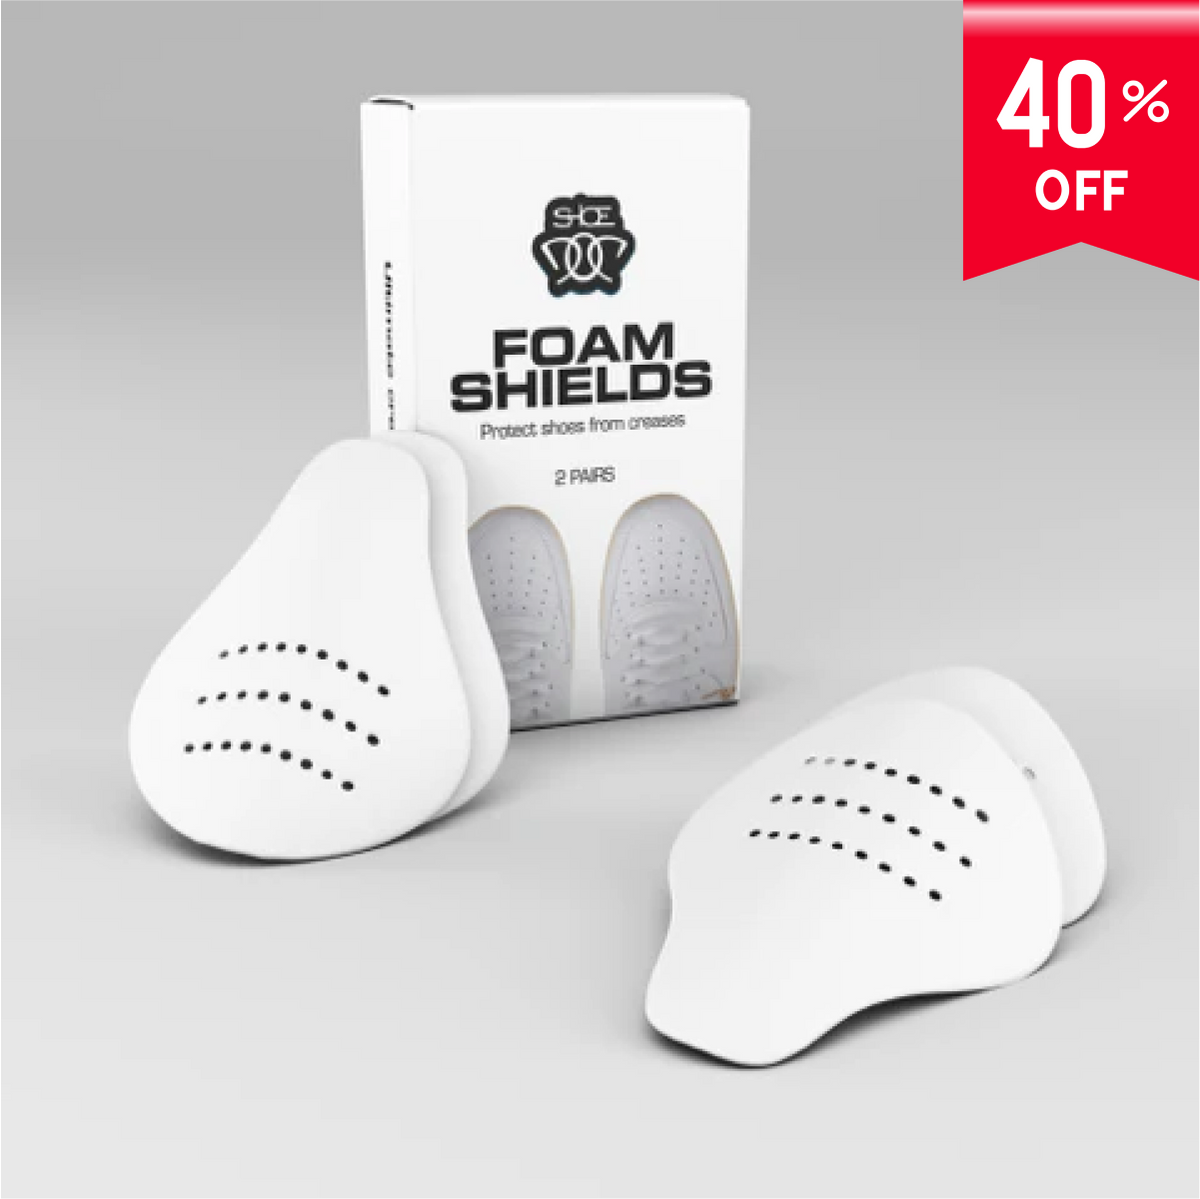 Foam Shields Crease Protectors (2 PAIRS)